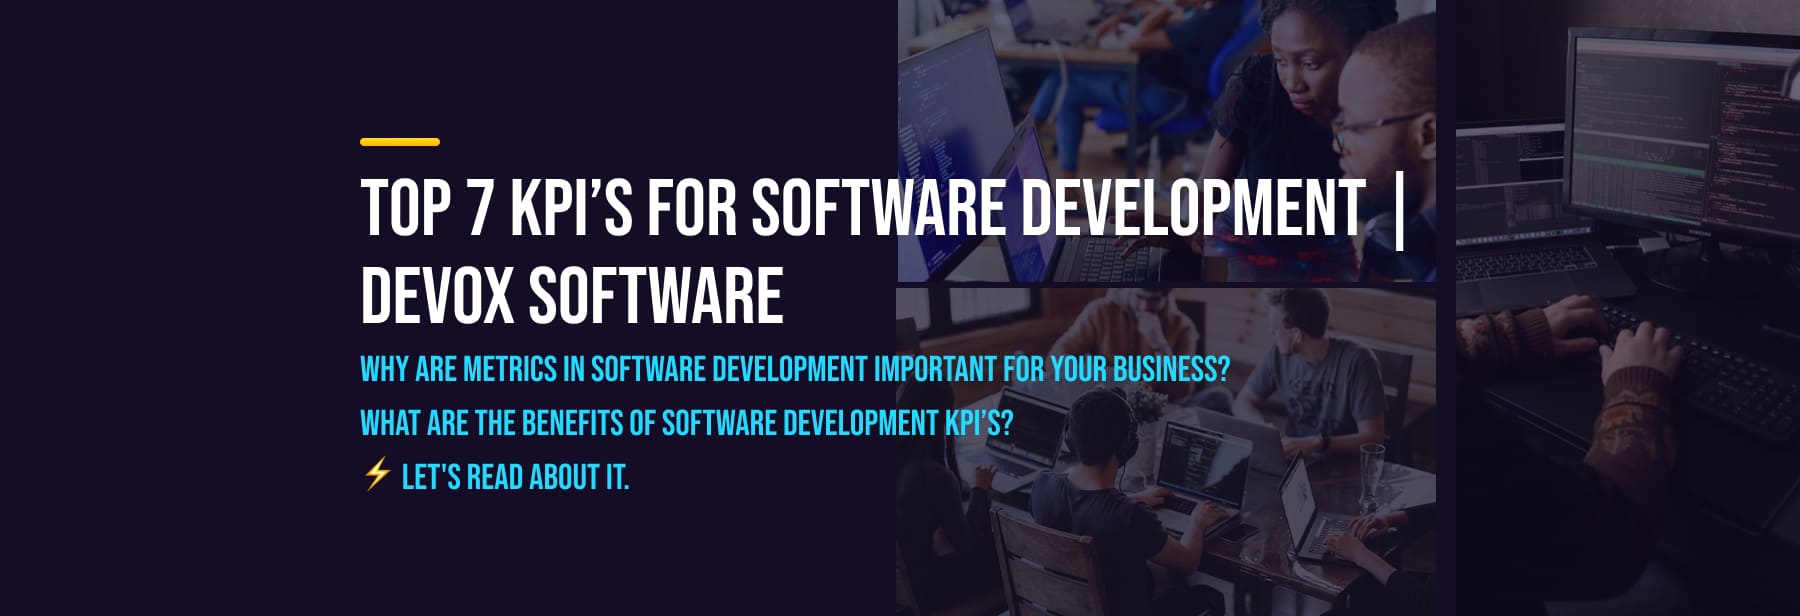 Top 7 KPIs For Software Development